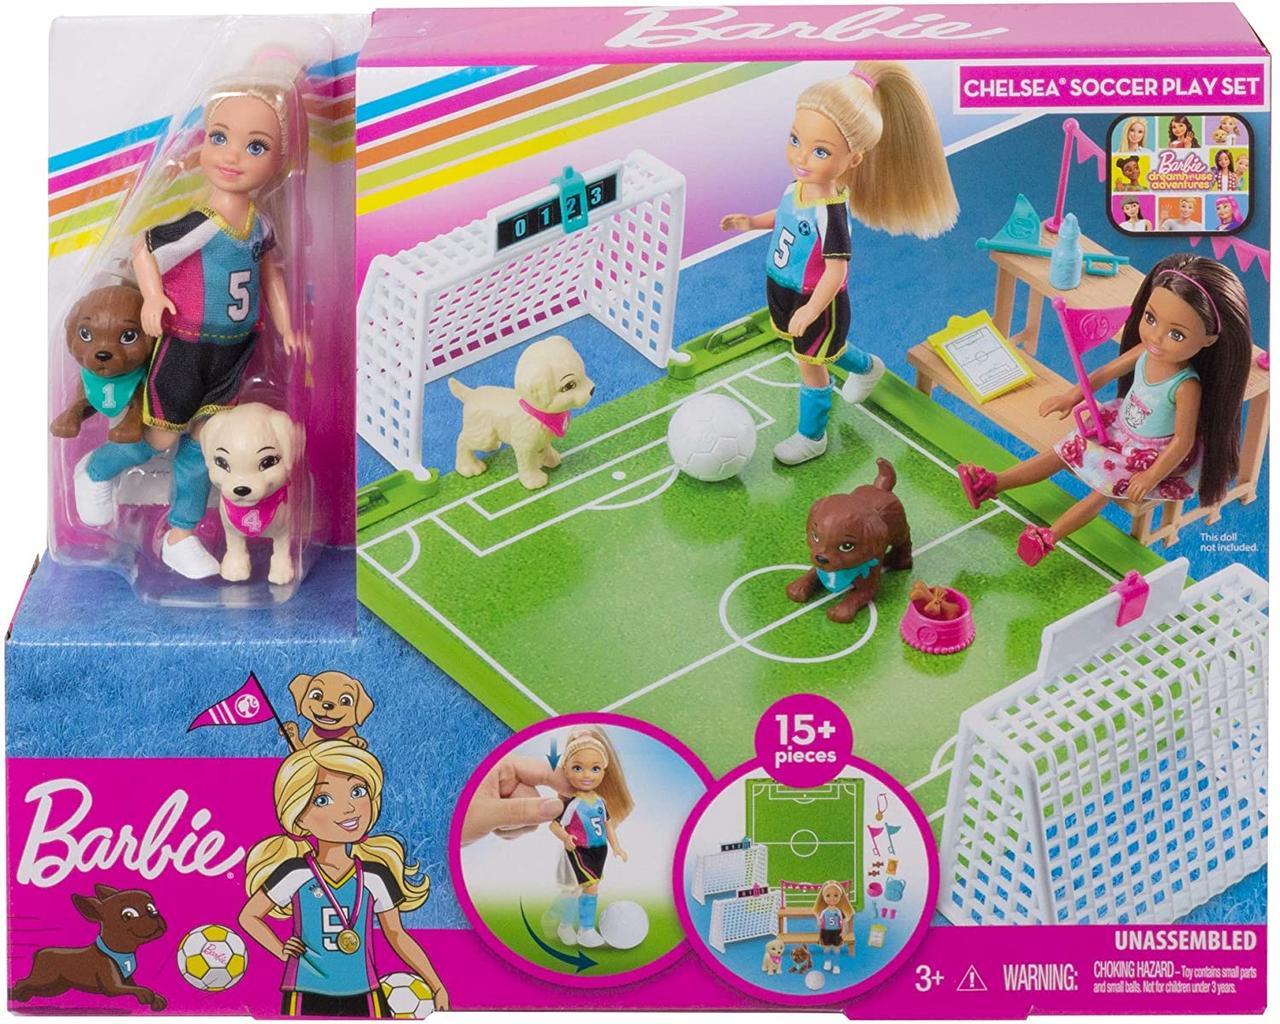 Набор Барби Челси игра в футбол Barbie Dreamhouse Chelsea Soccer Plays